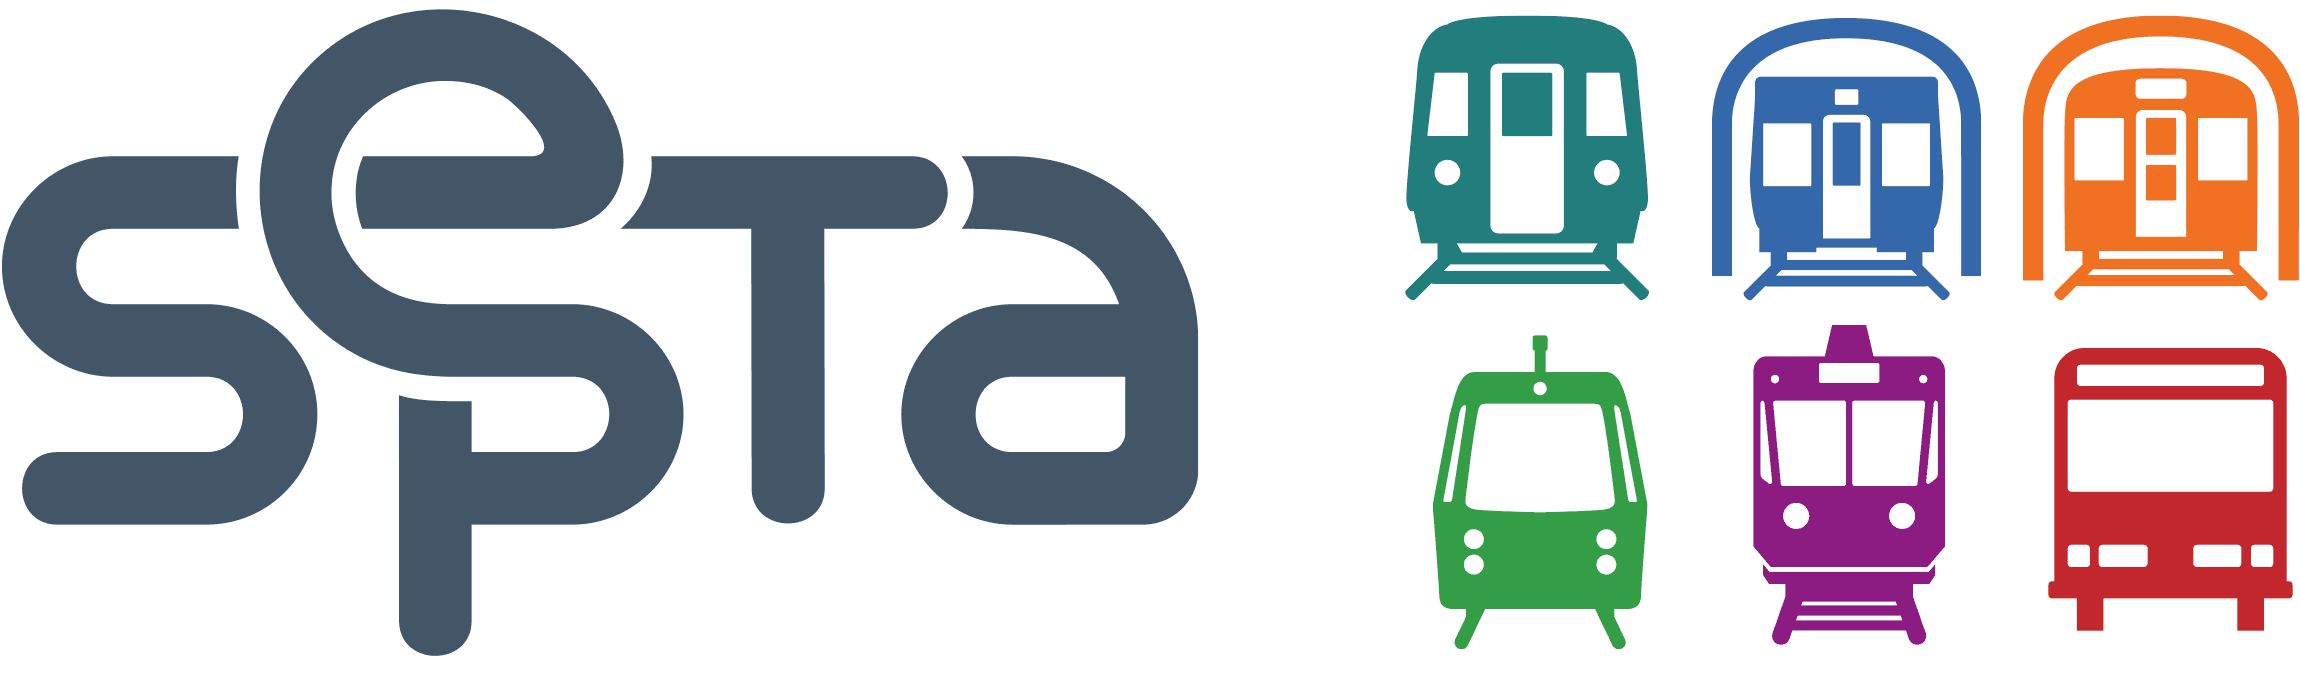 SEPTA Logo - Unified branding and signage for Philadelphia's transit system ...